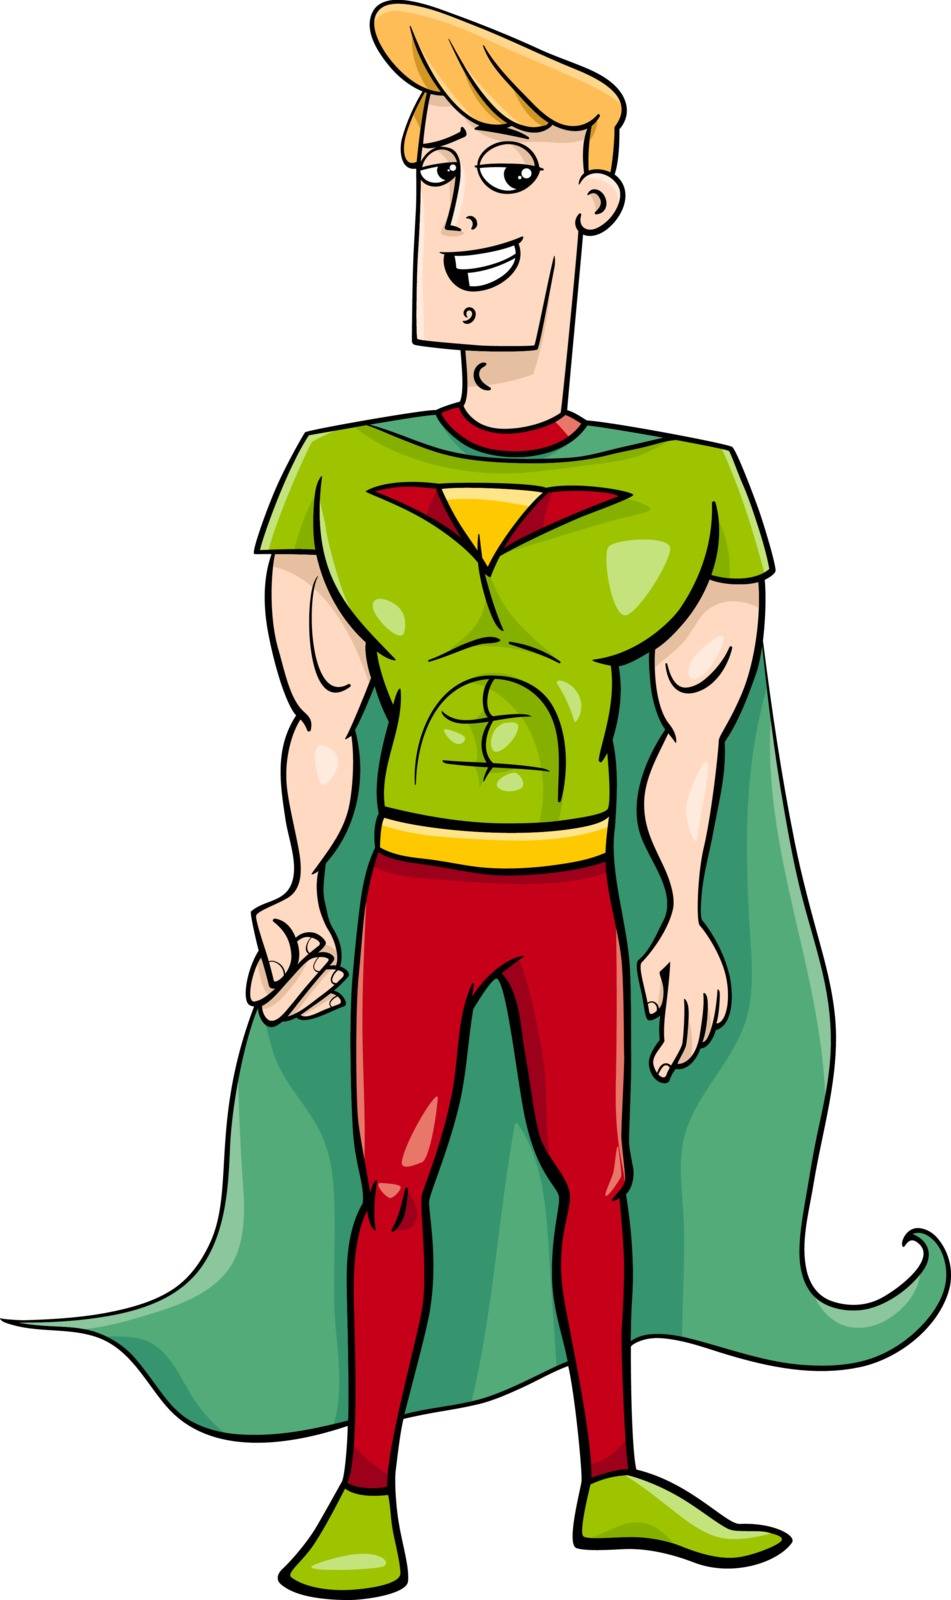 Cartoon Illustration of Superhero Character or Man in Hero Costume